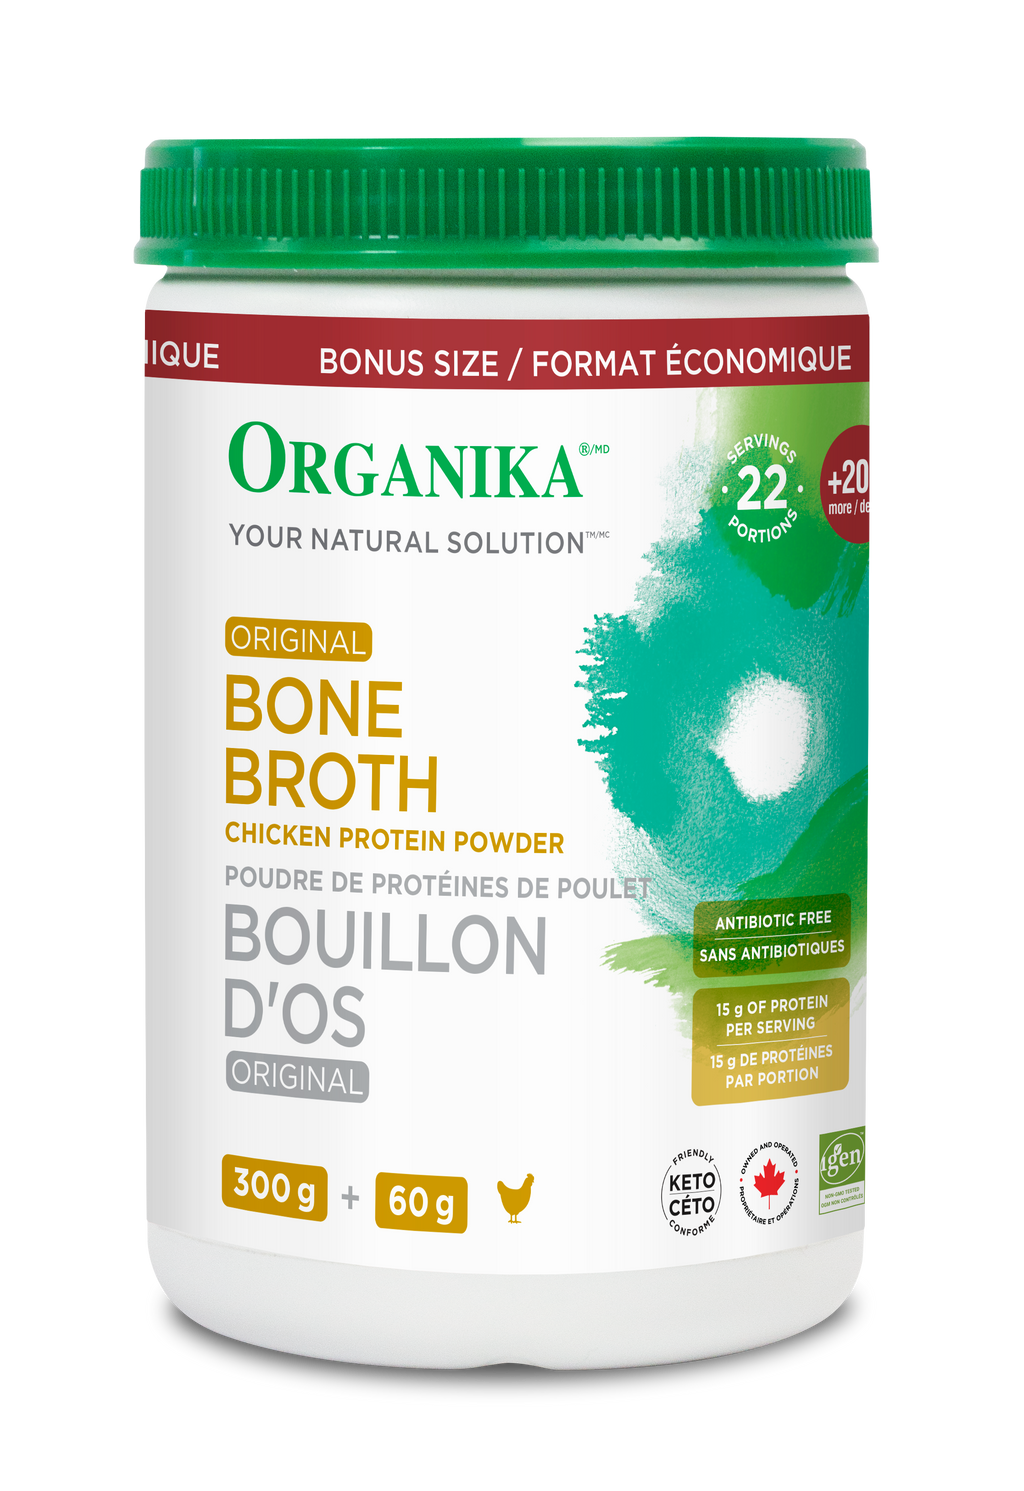 Baron ugyldig bibliotekar Buy Organika Bone Broth Beef Protein Powder Bonus Size 360 g - With Free  Shipping in USA. Reviews, Ingredients, Benefits at Vitasave US